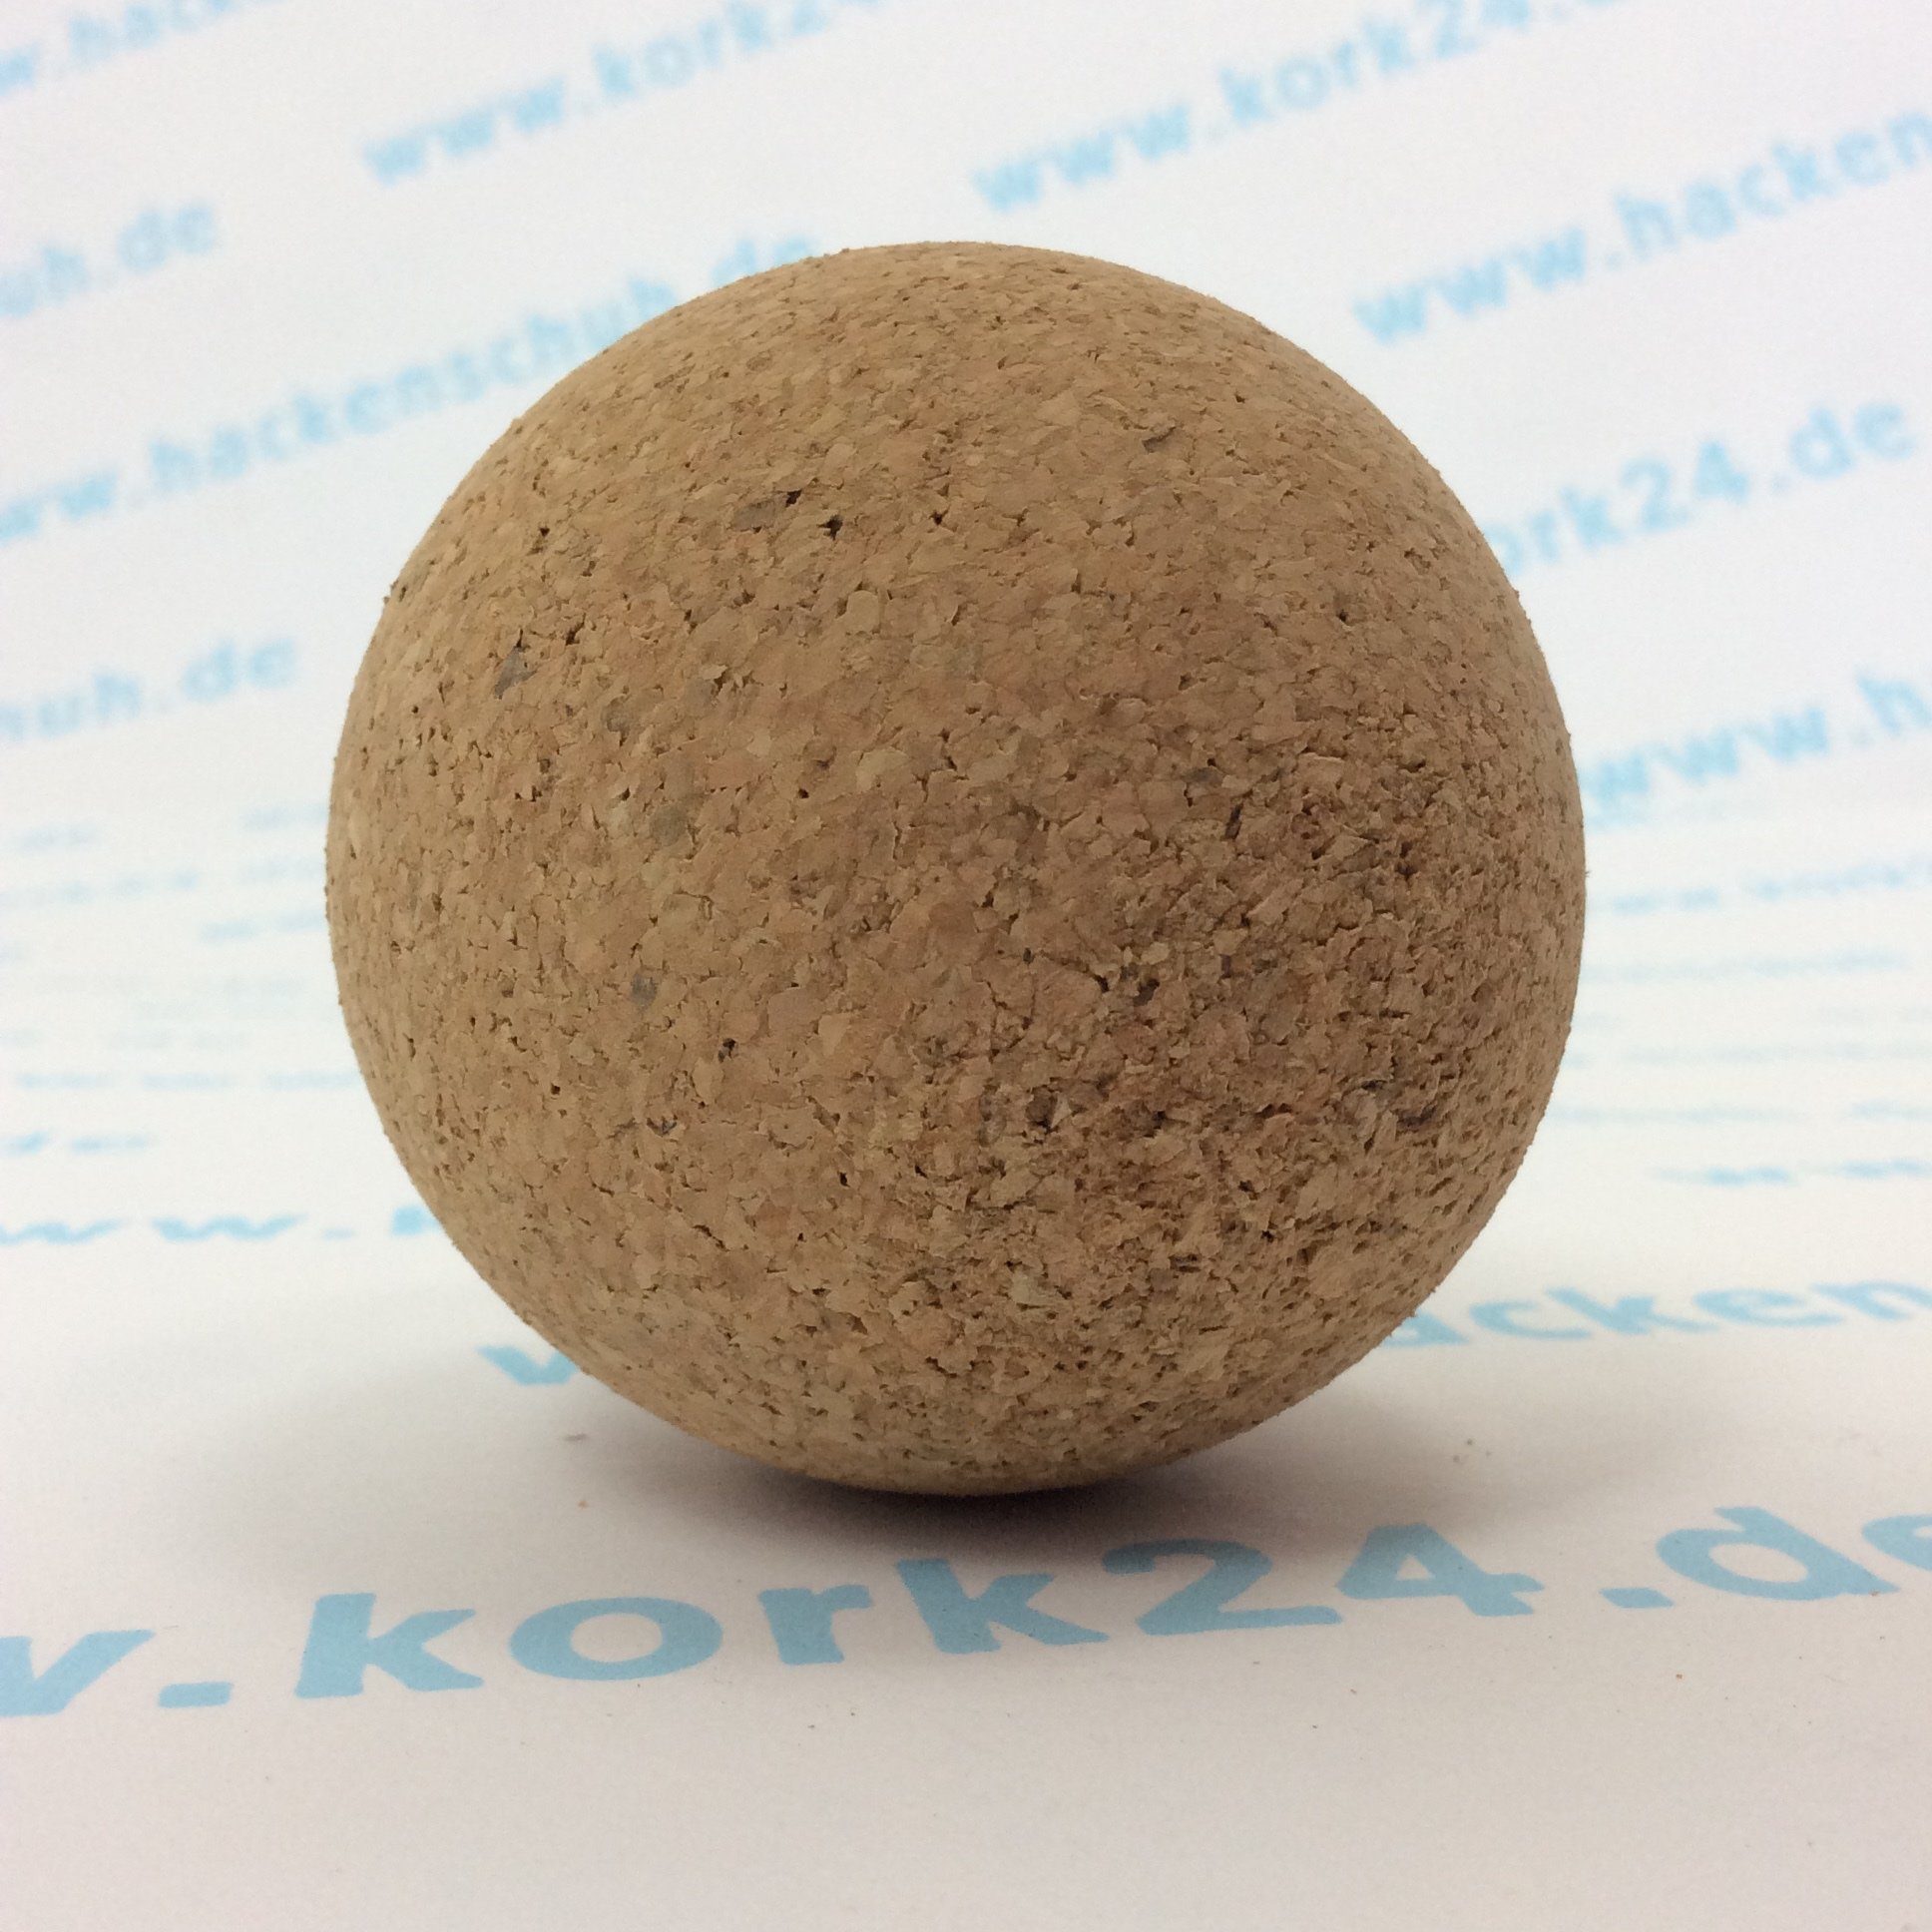 EKB-Kork Yogablock Basteln Spielzeug Kork Faszien Massage 60mm Faszienball Kugel